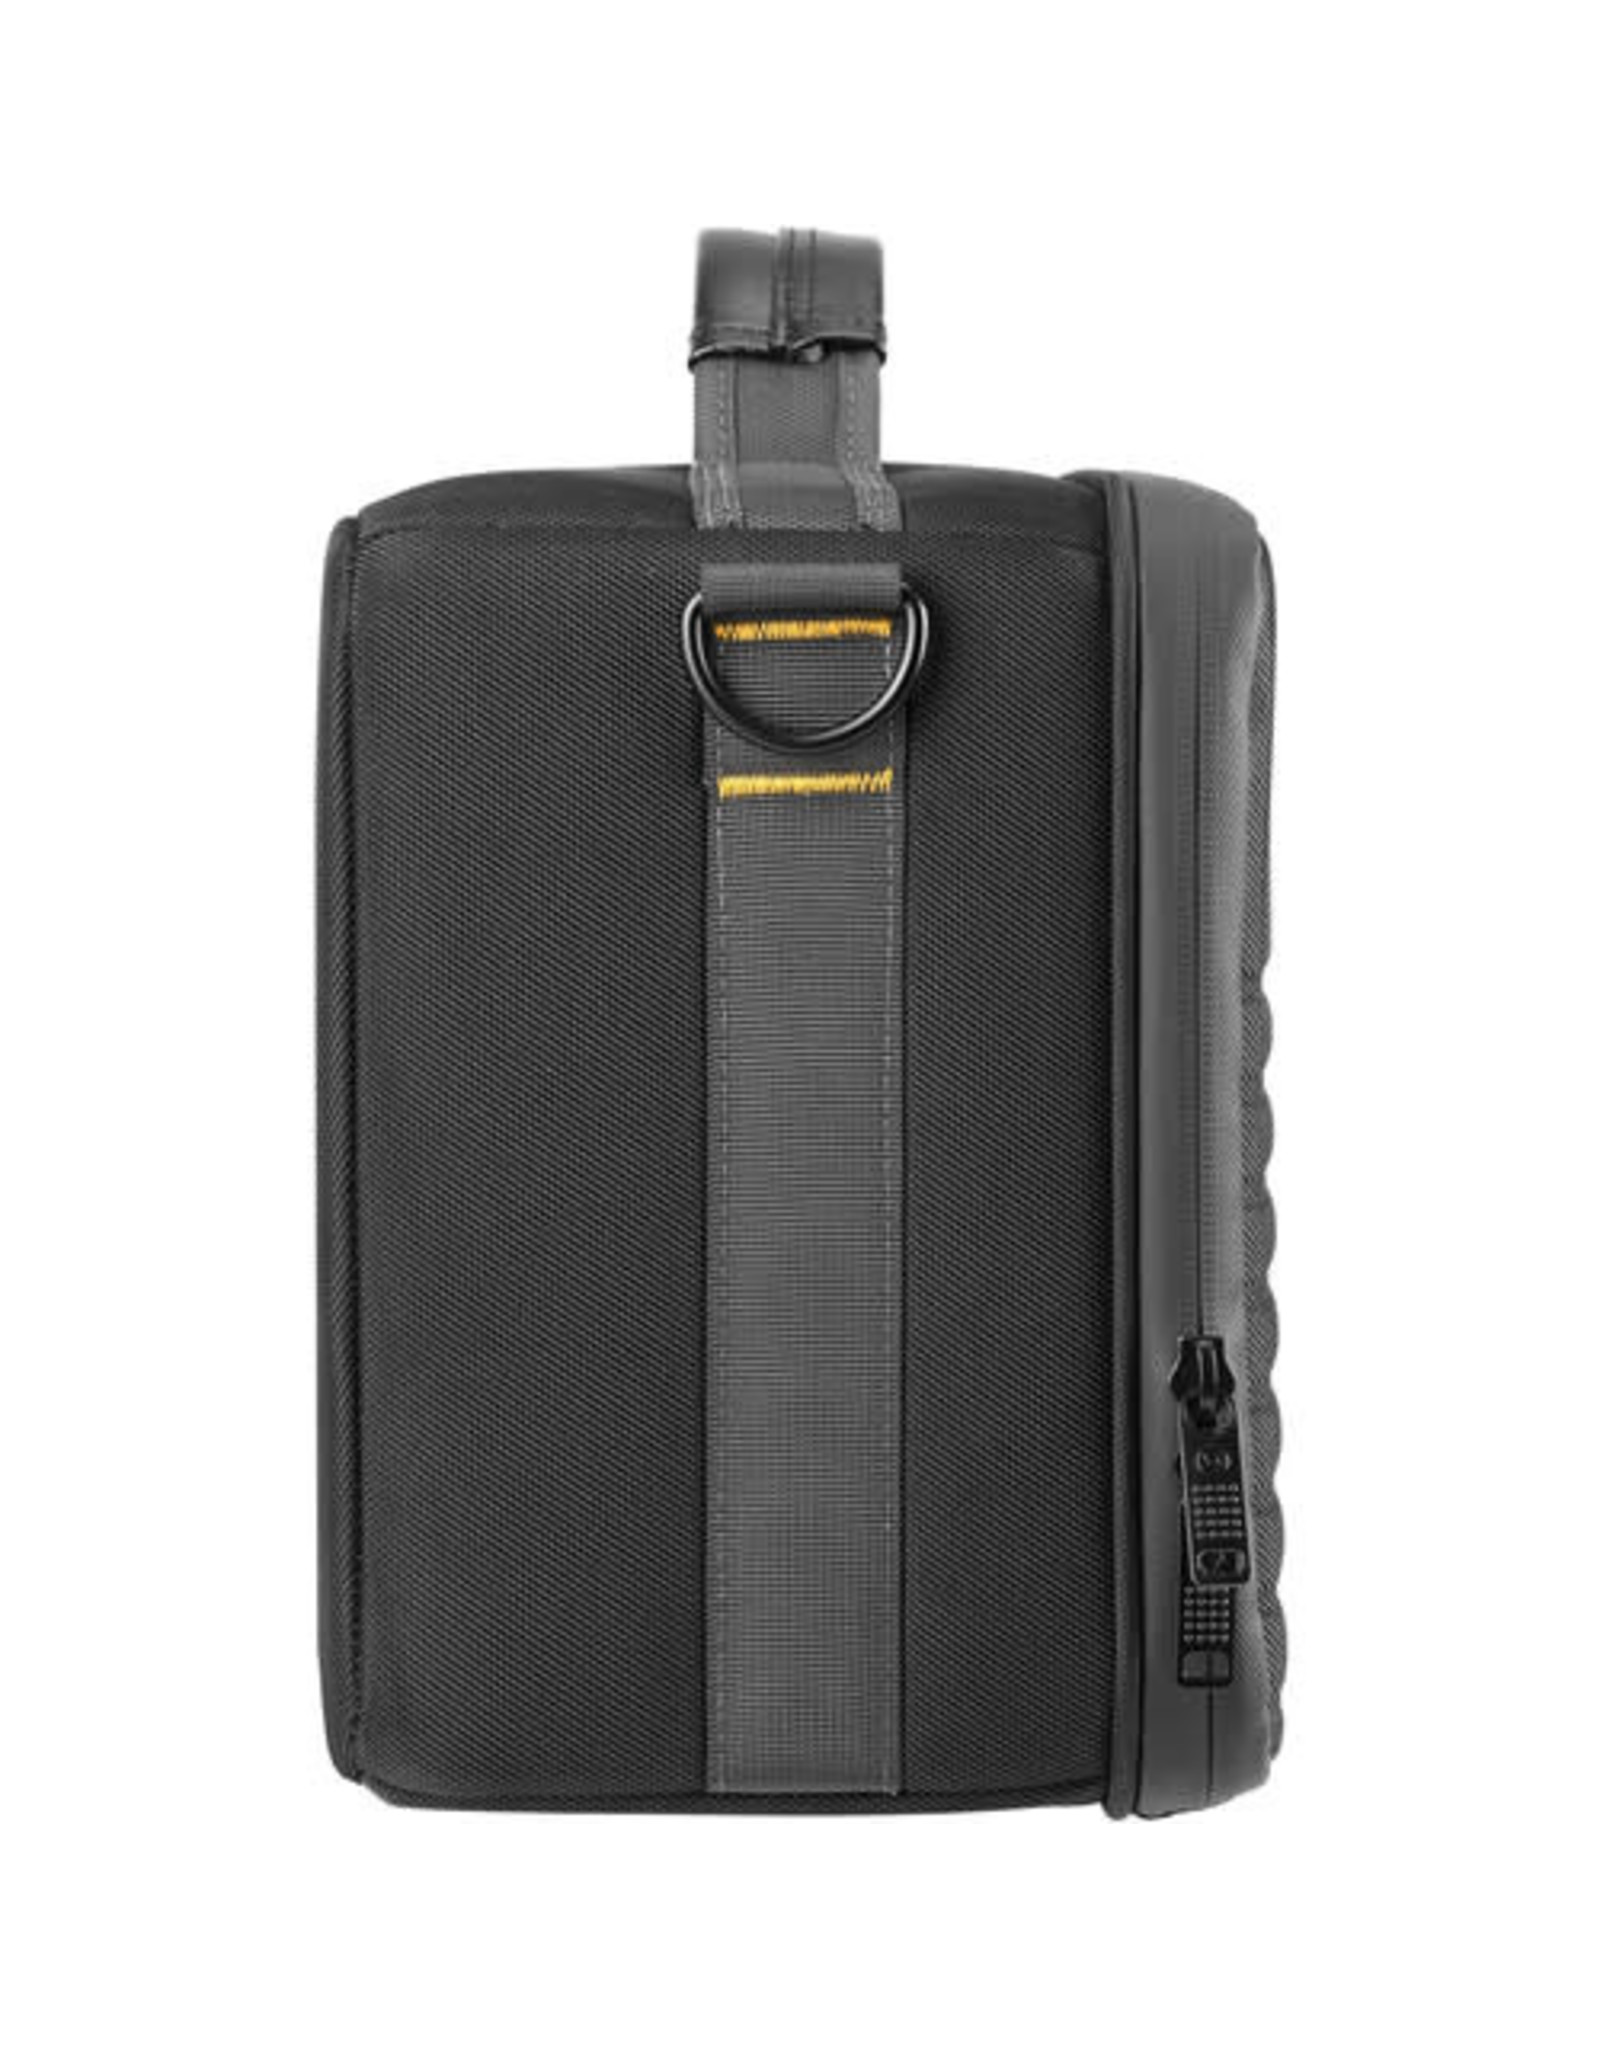 Vanguard Vanguard VEO BIB S40 Bag-in-Bag System Camera Case